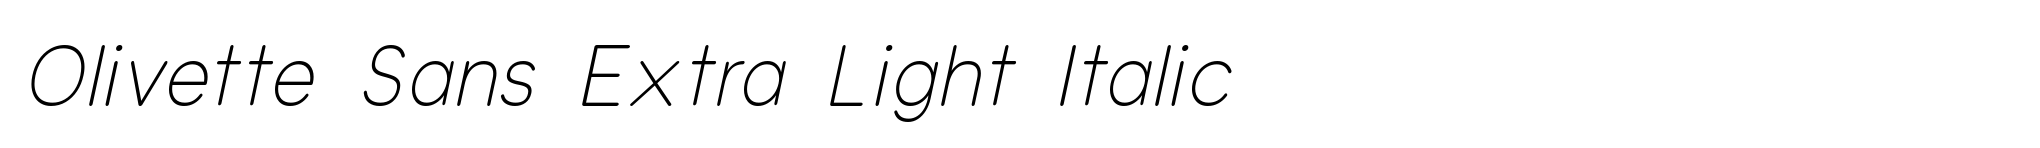 Olivette Sans Extra Light Italic image